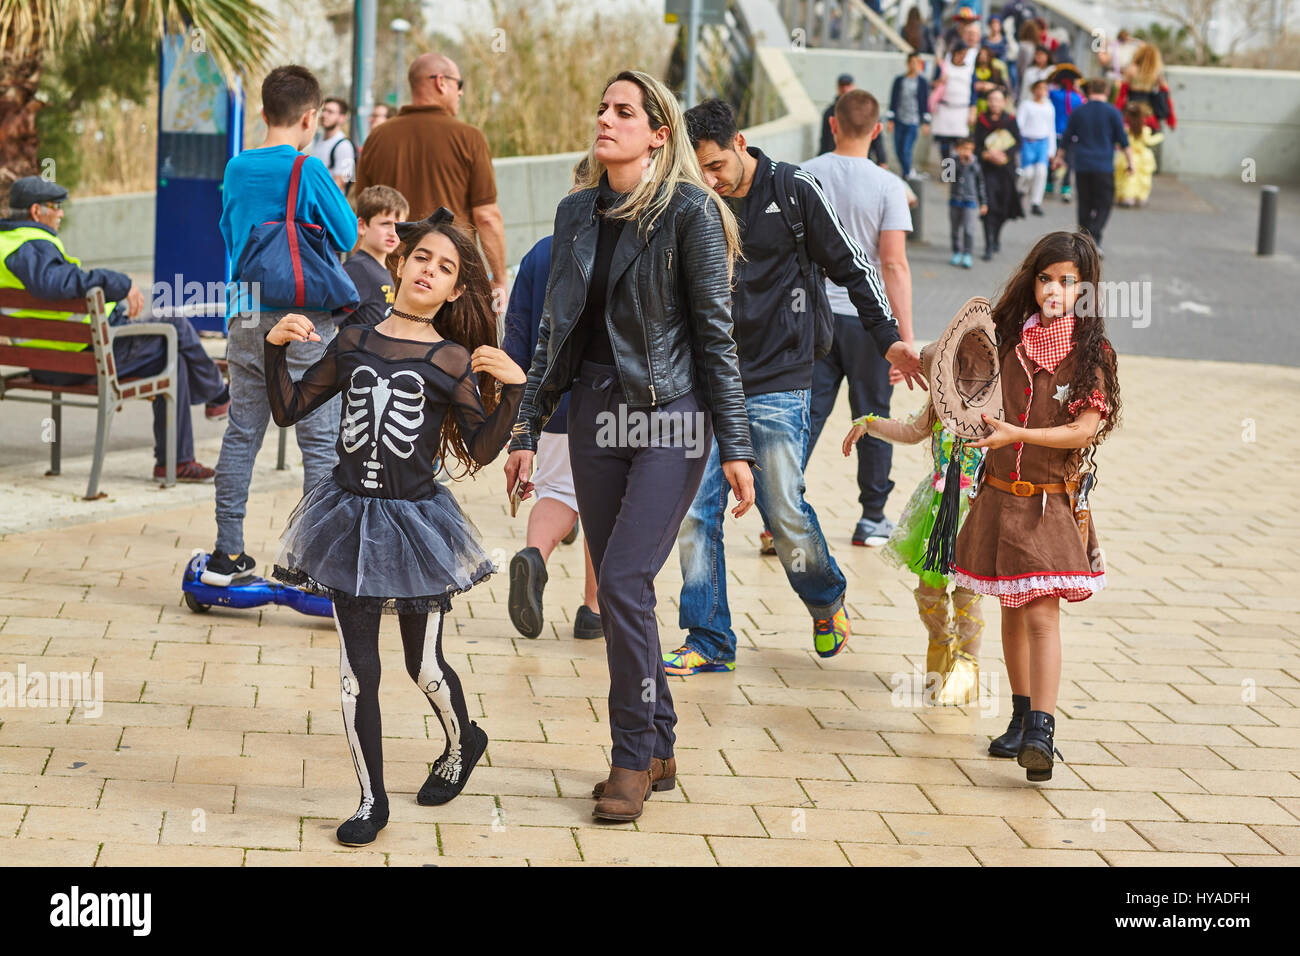 Tel Aviv - 20 February 2017: People wearing costumes in Israel during Purim celebration Stock Photo